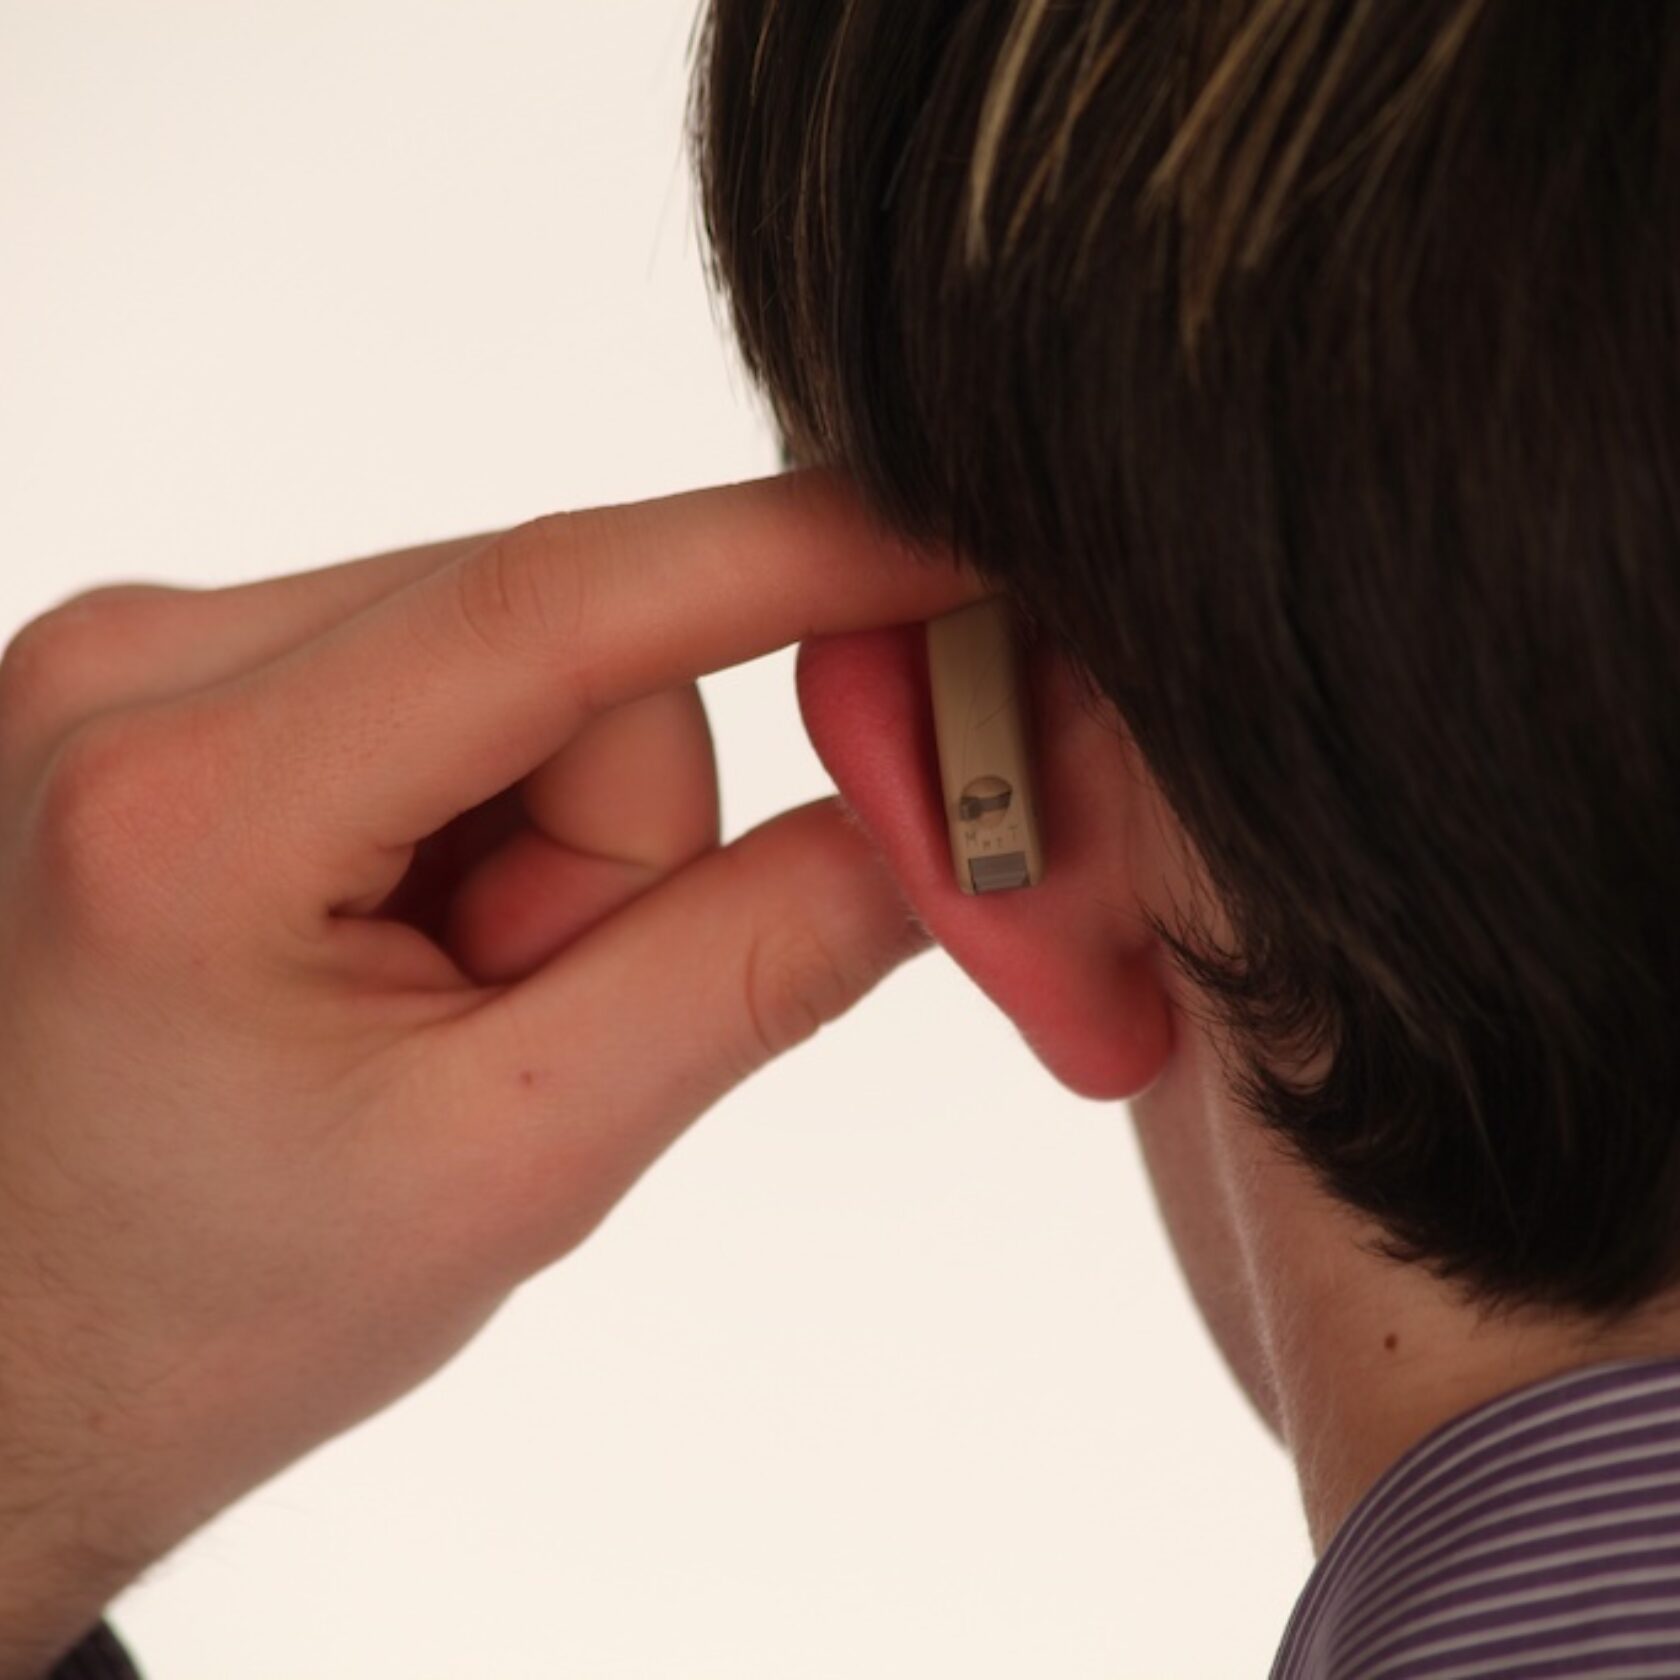 Mensch mit Hörgerät